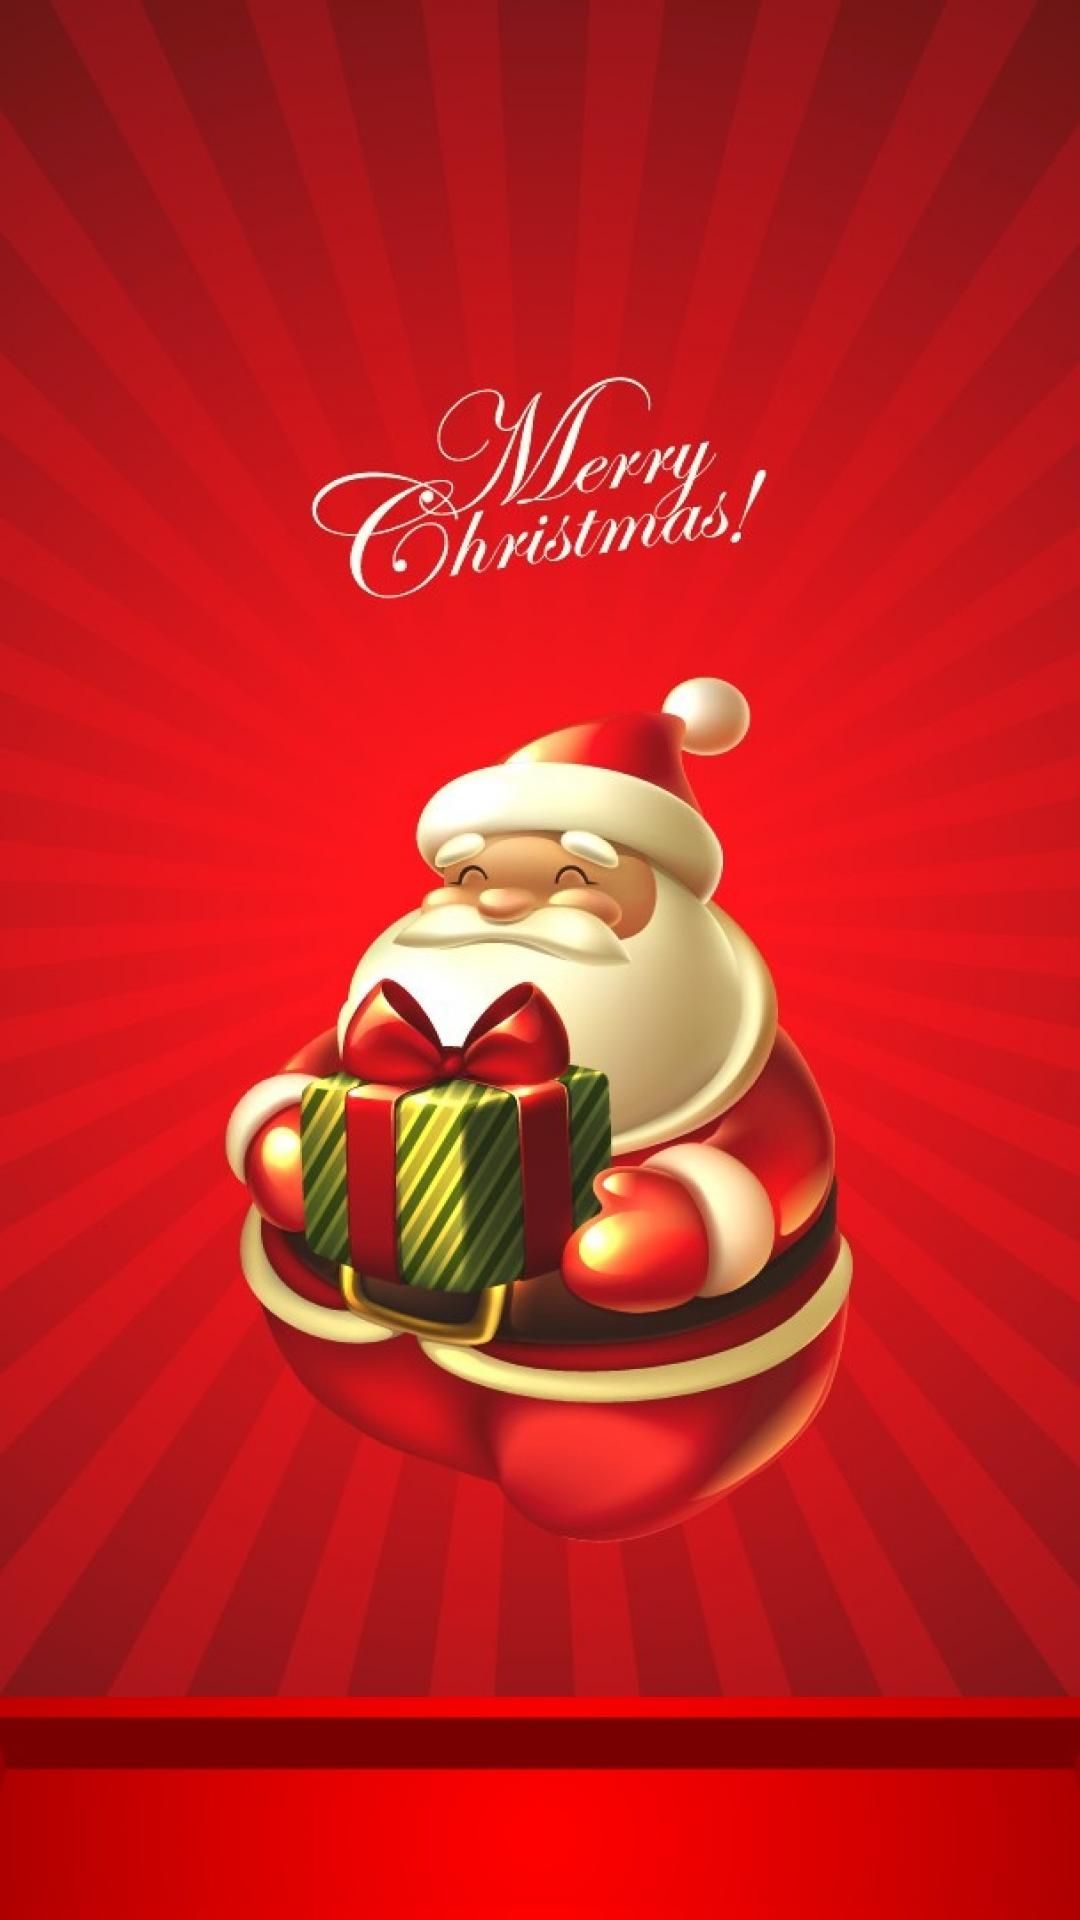 Cute Christmas Santa Claus iPhone 6 Wallpaper Download. iPhone Wallpaper, iP. Merry christmas wallpaper, Wallpaper iphone christmas, Christmas desktop wallpaper